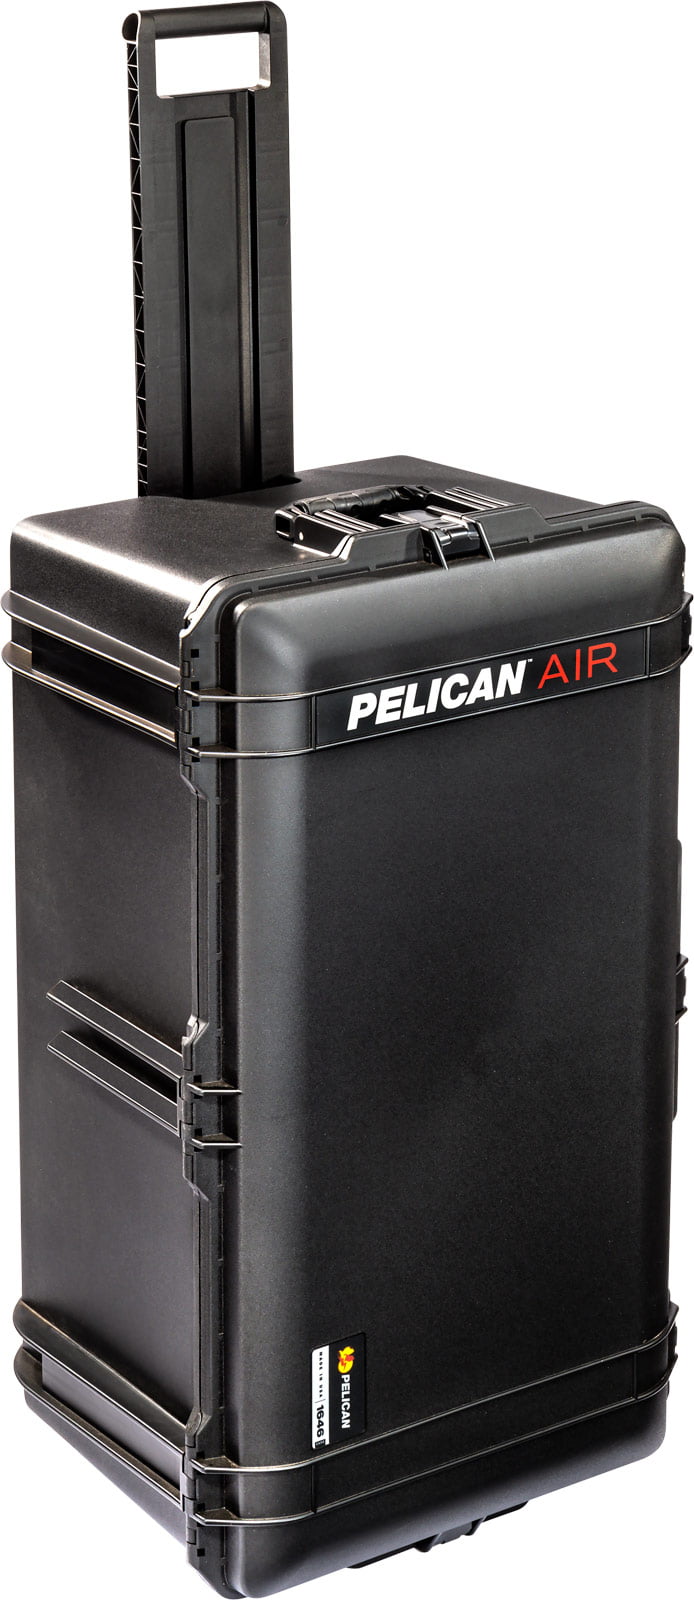 Pelican 1646 Air Case